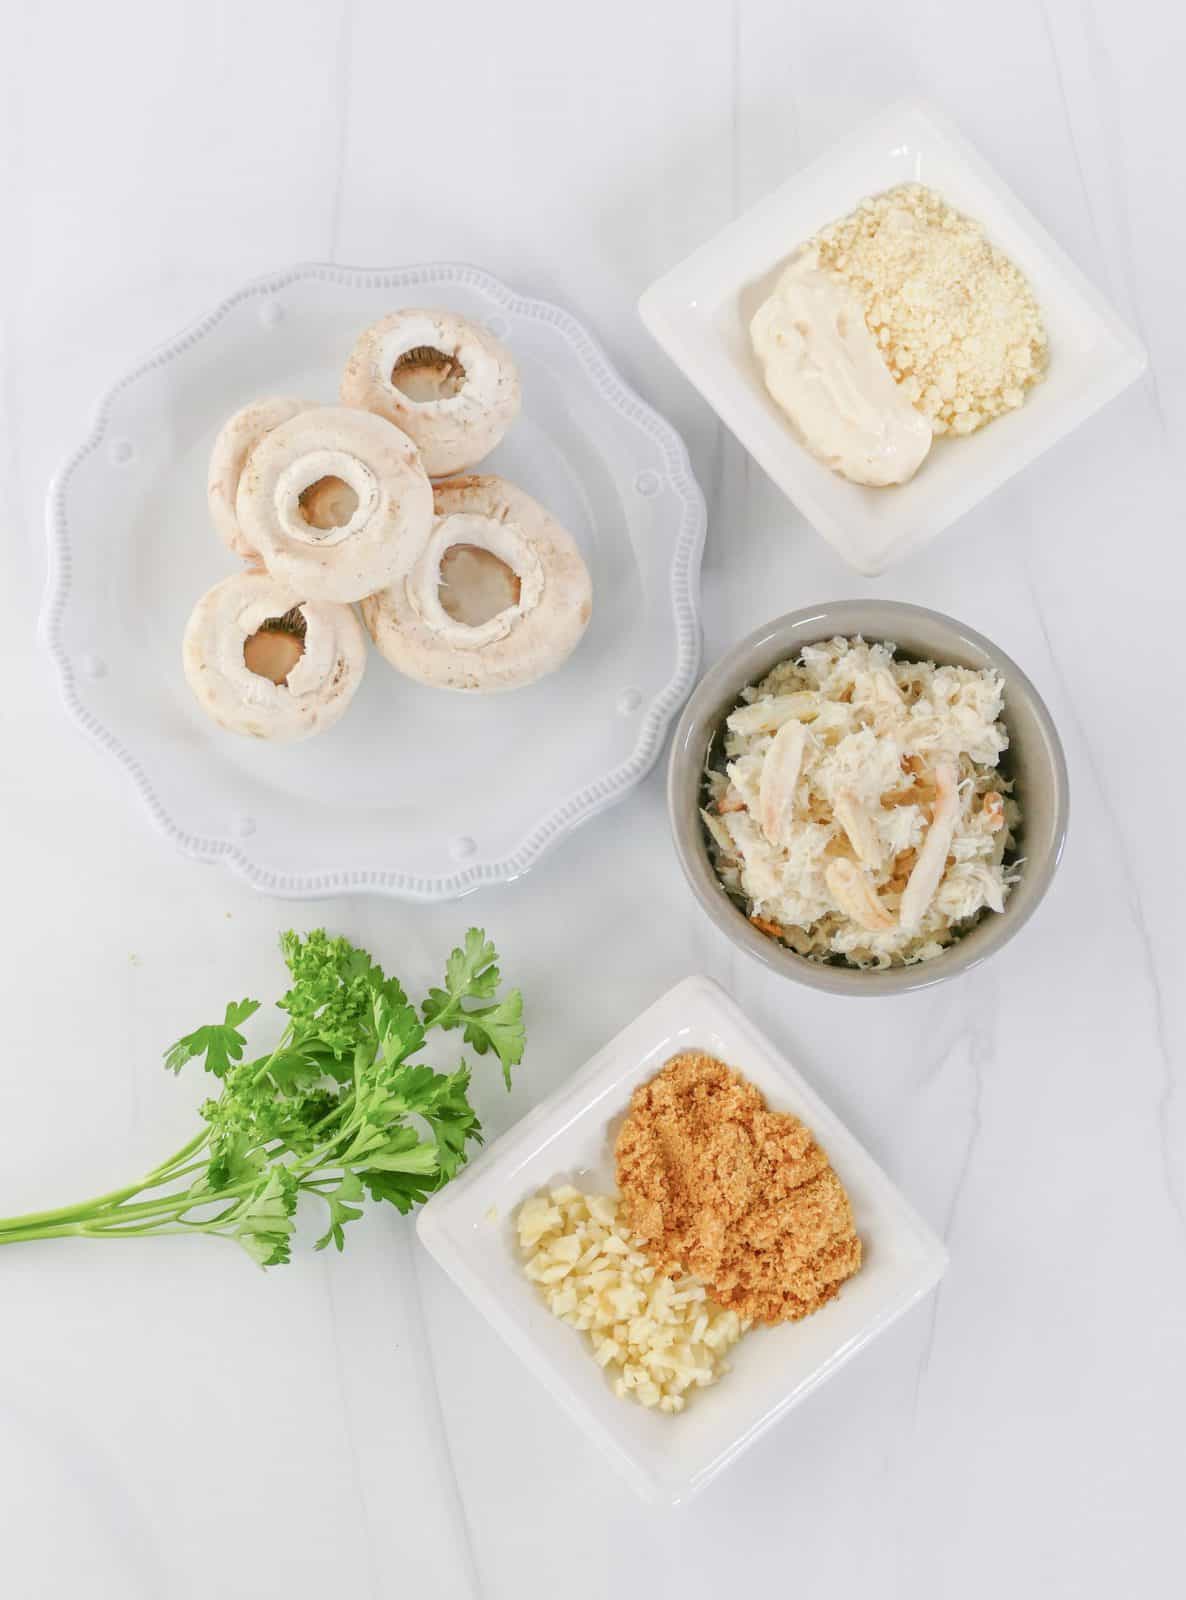 Ingredients needed: white mushrooms, crab meat, mayonnaise, garlic croutons, parmesan cheese, garlic,  parsley.